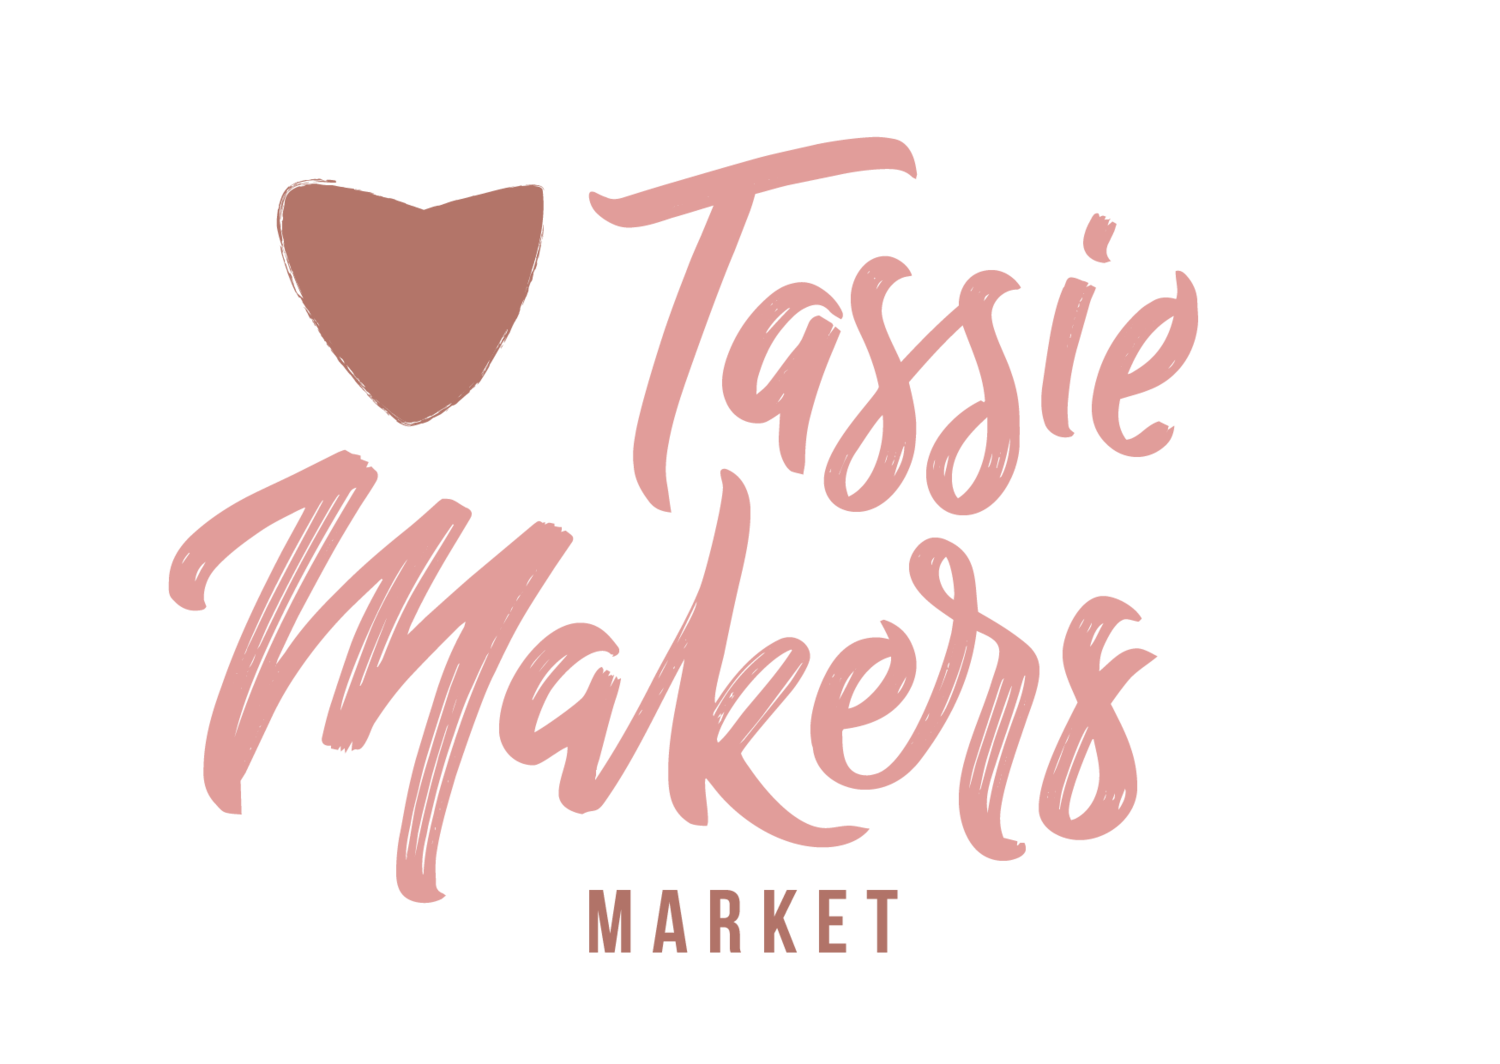 Centrepoint Tassie Makers Market